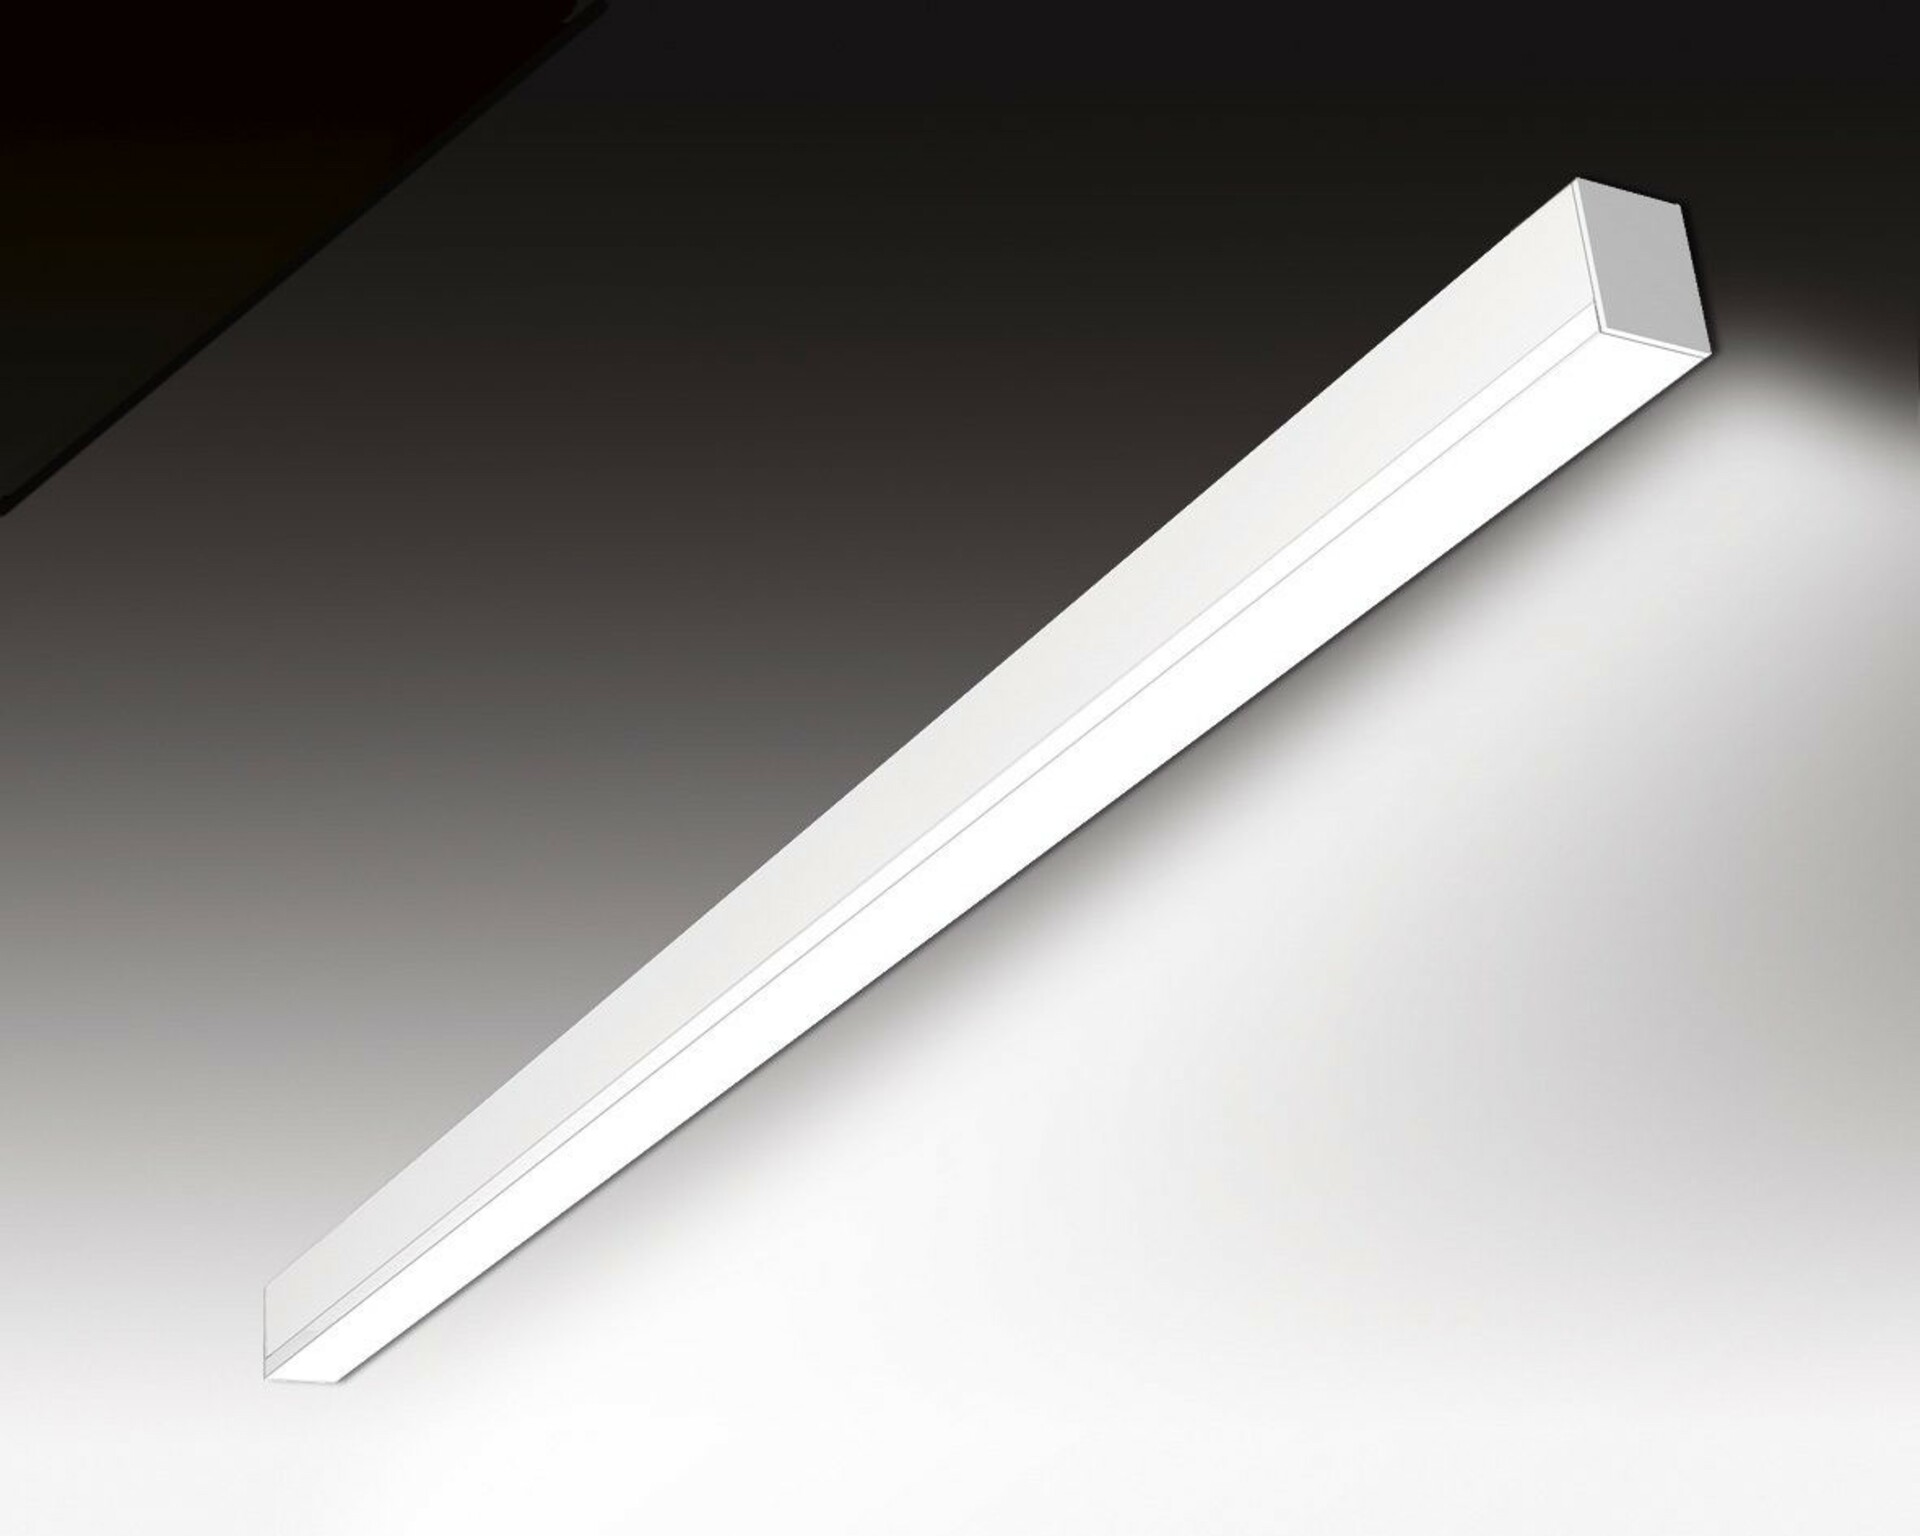 SEC Nástěnné LED svítidlo WEGA-MODULE2-DB-DIM-DALI, 18 W, bílá, 1130 x 50 x 65 mm, 3000 K, 2400 lm 320-B-113-01-01-SP